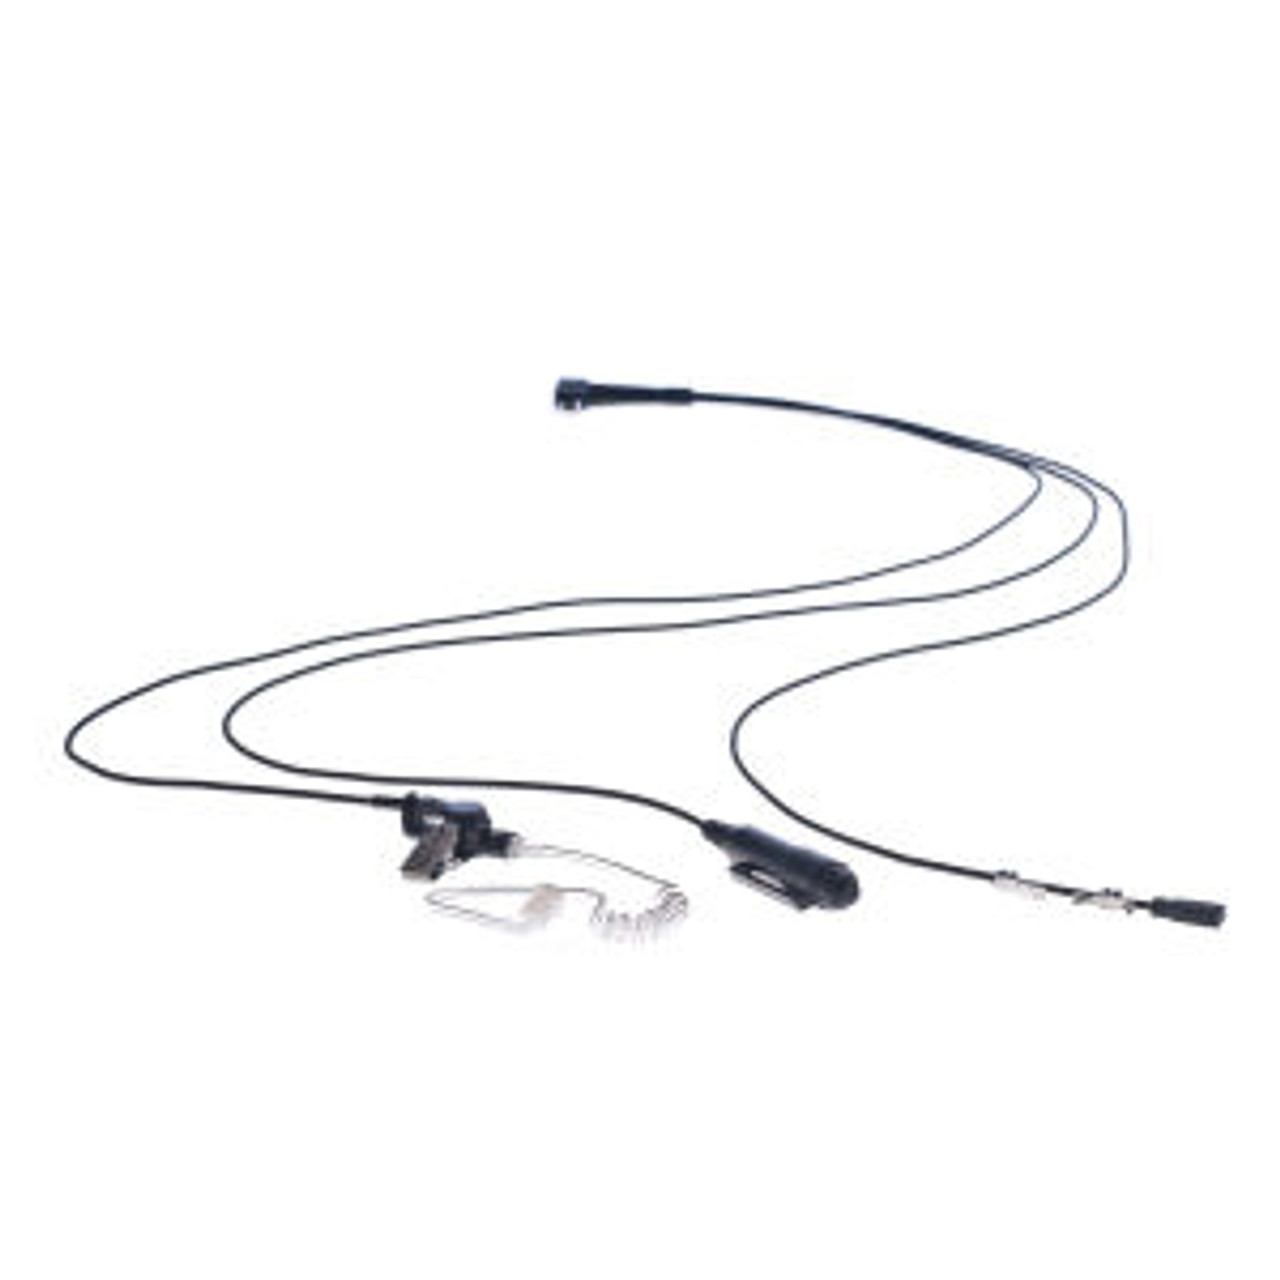 Kenwood TK-5230 3-Wire Surveillance Kit